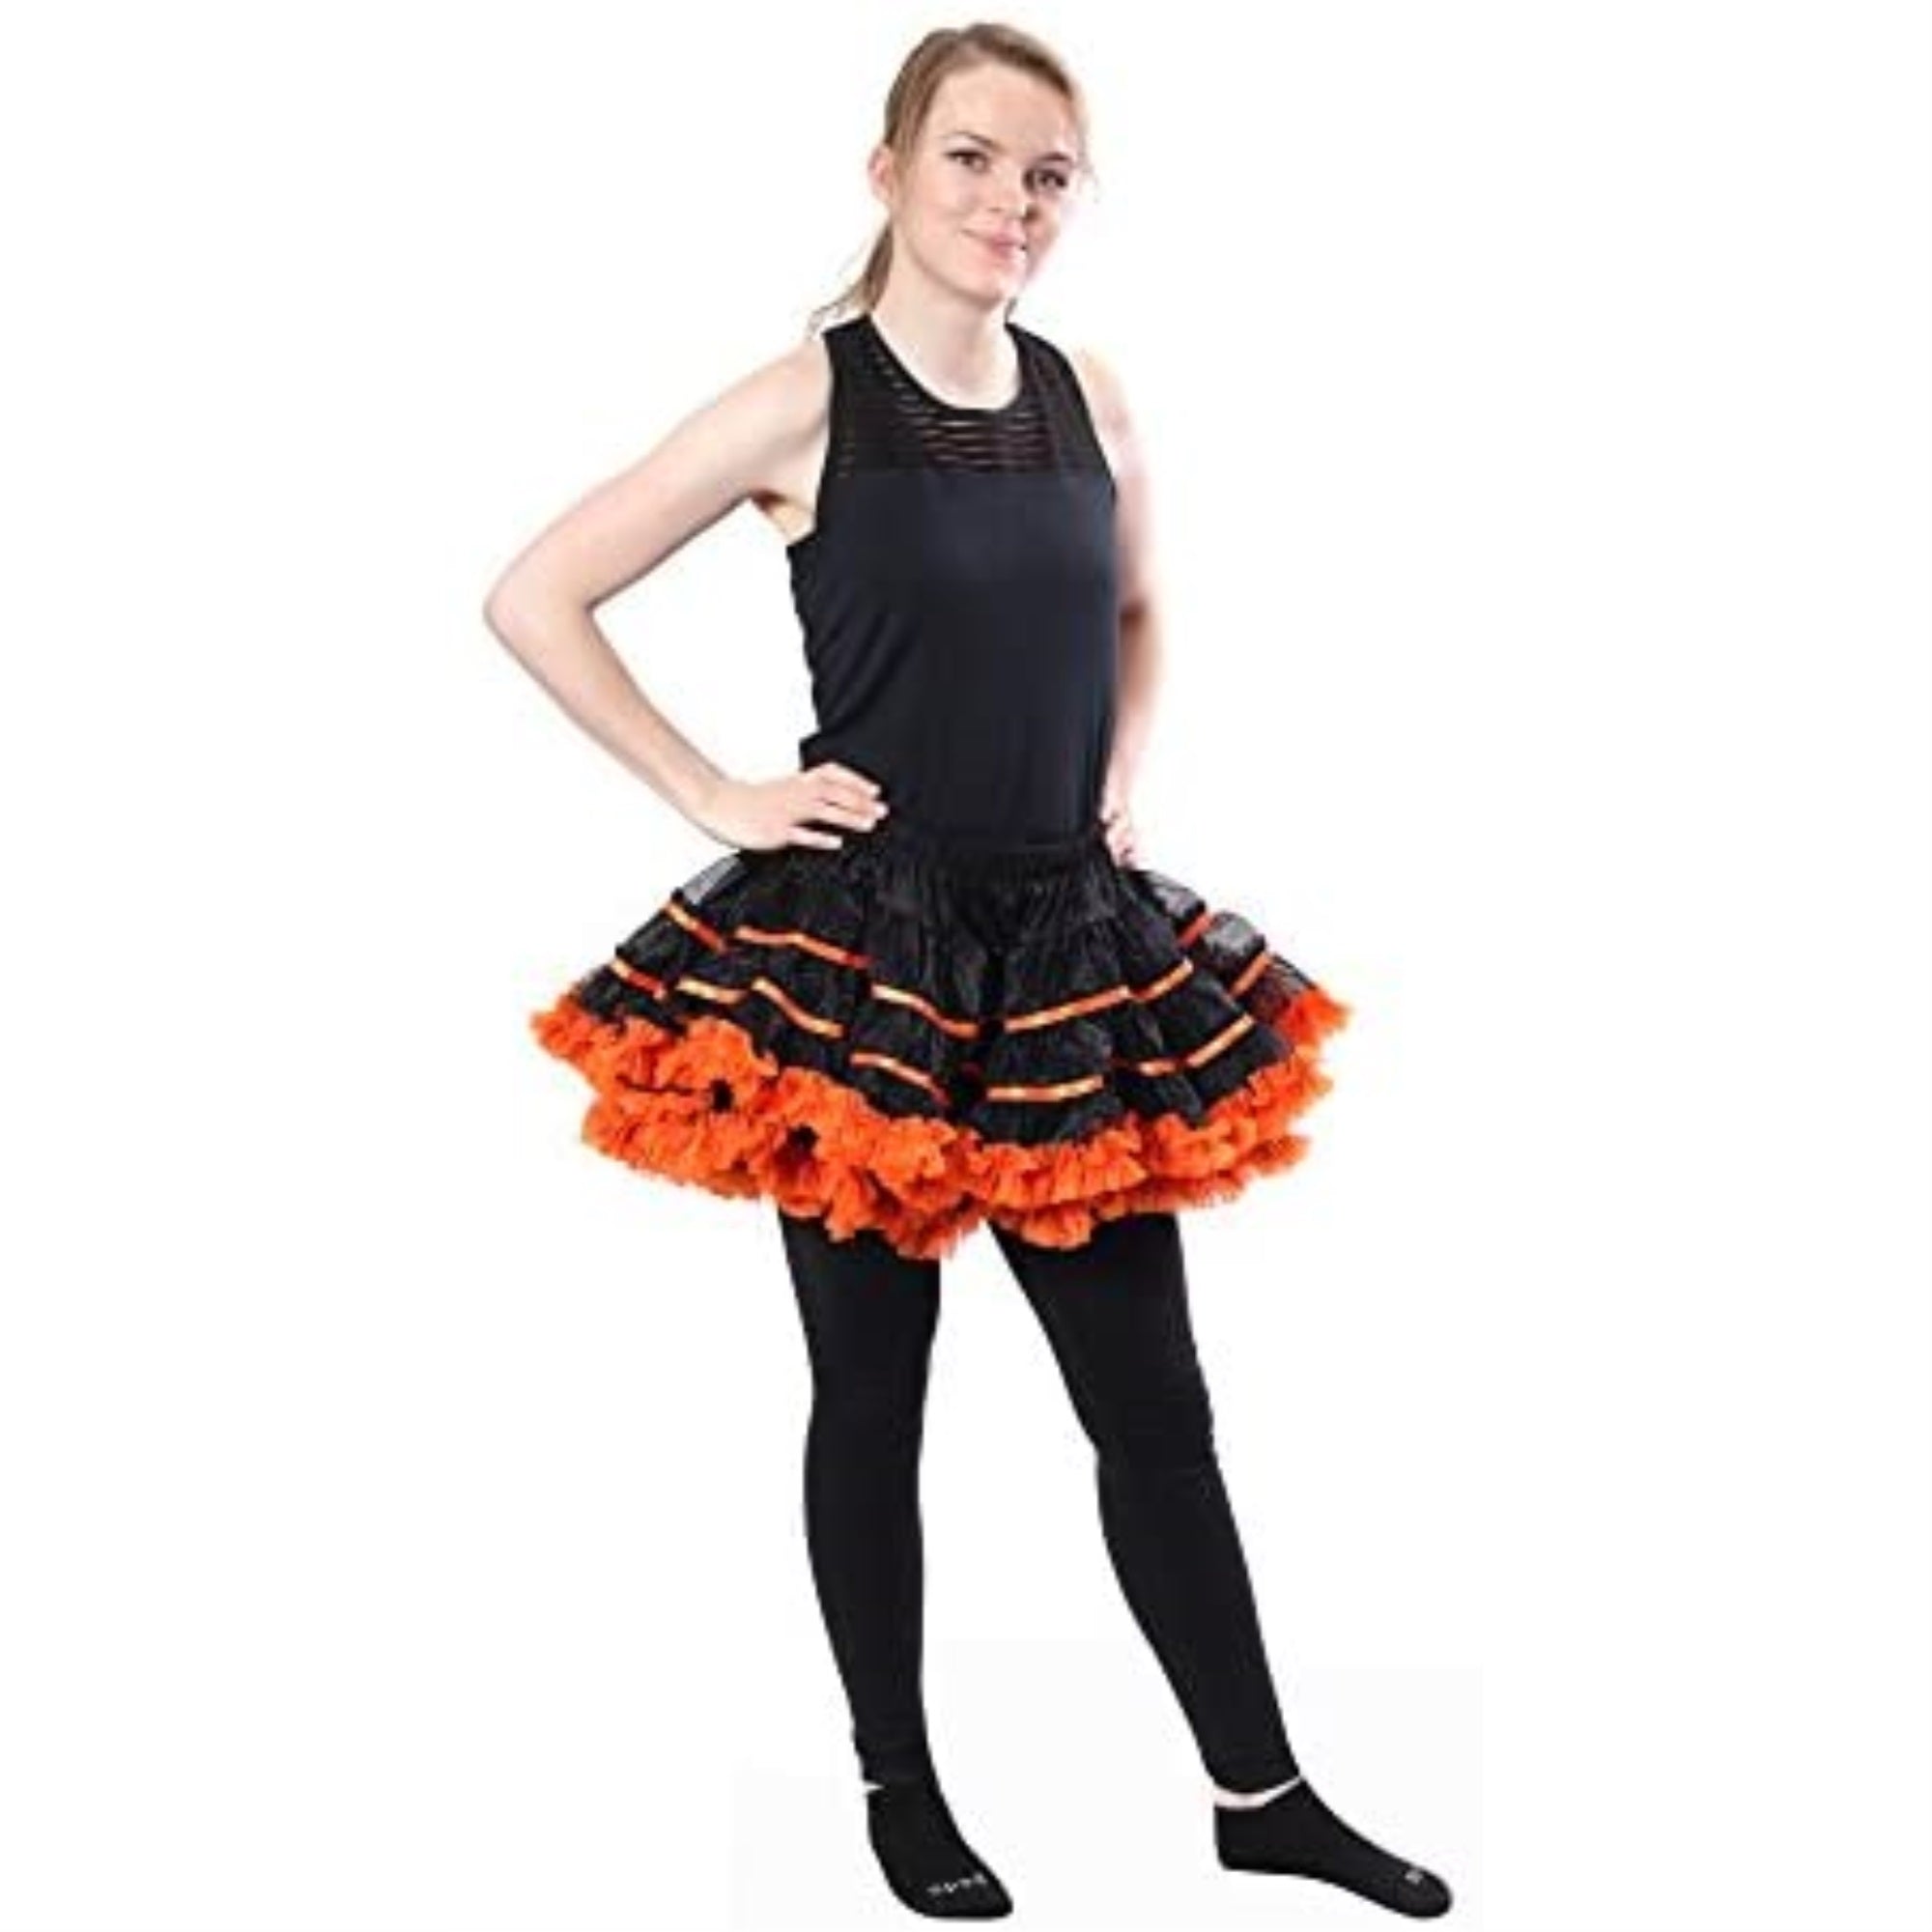 Adult Tulle Costume Petticoat - Black/Orange